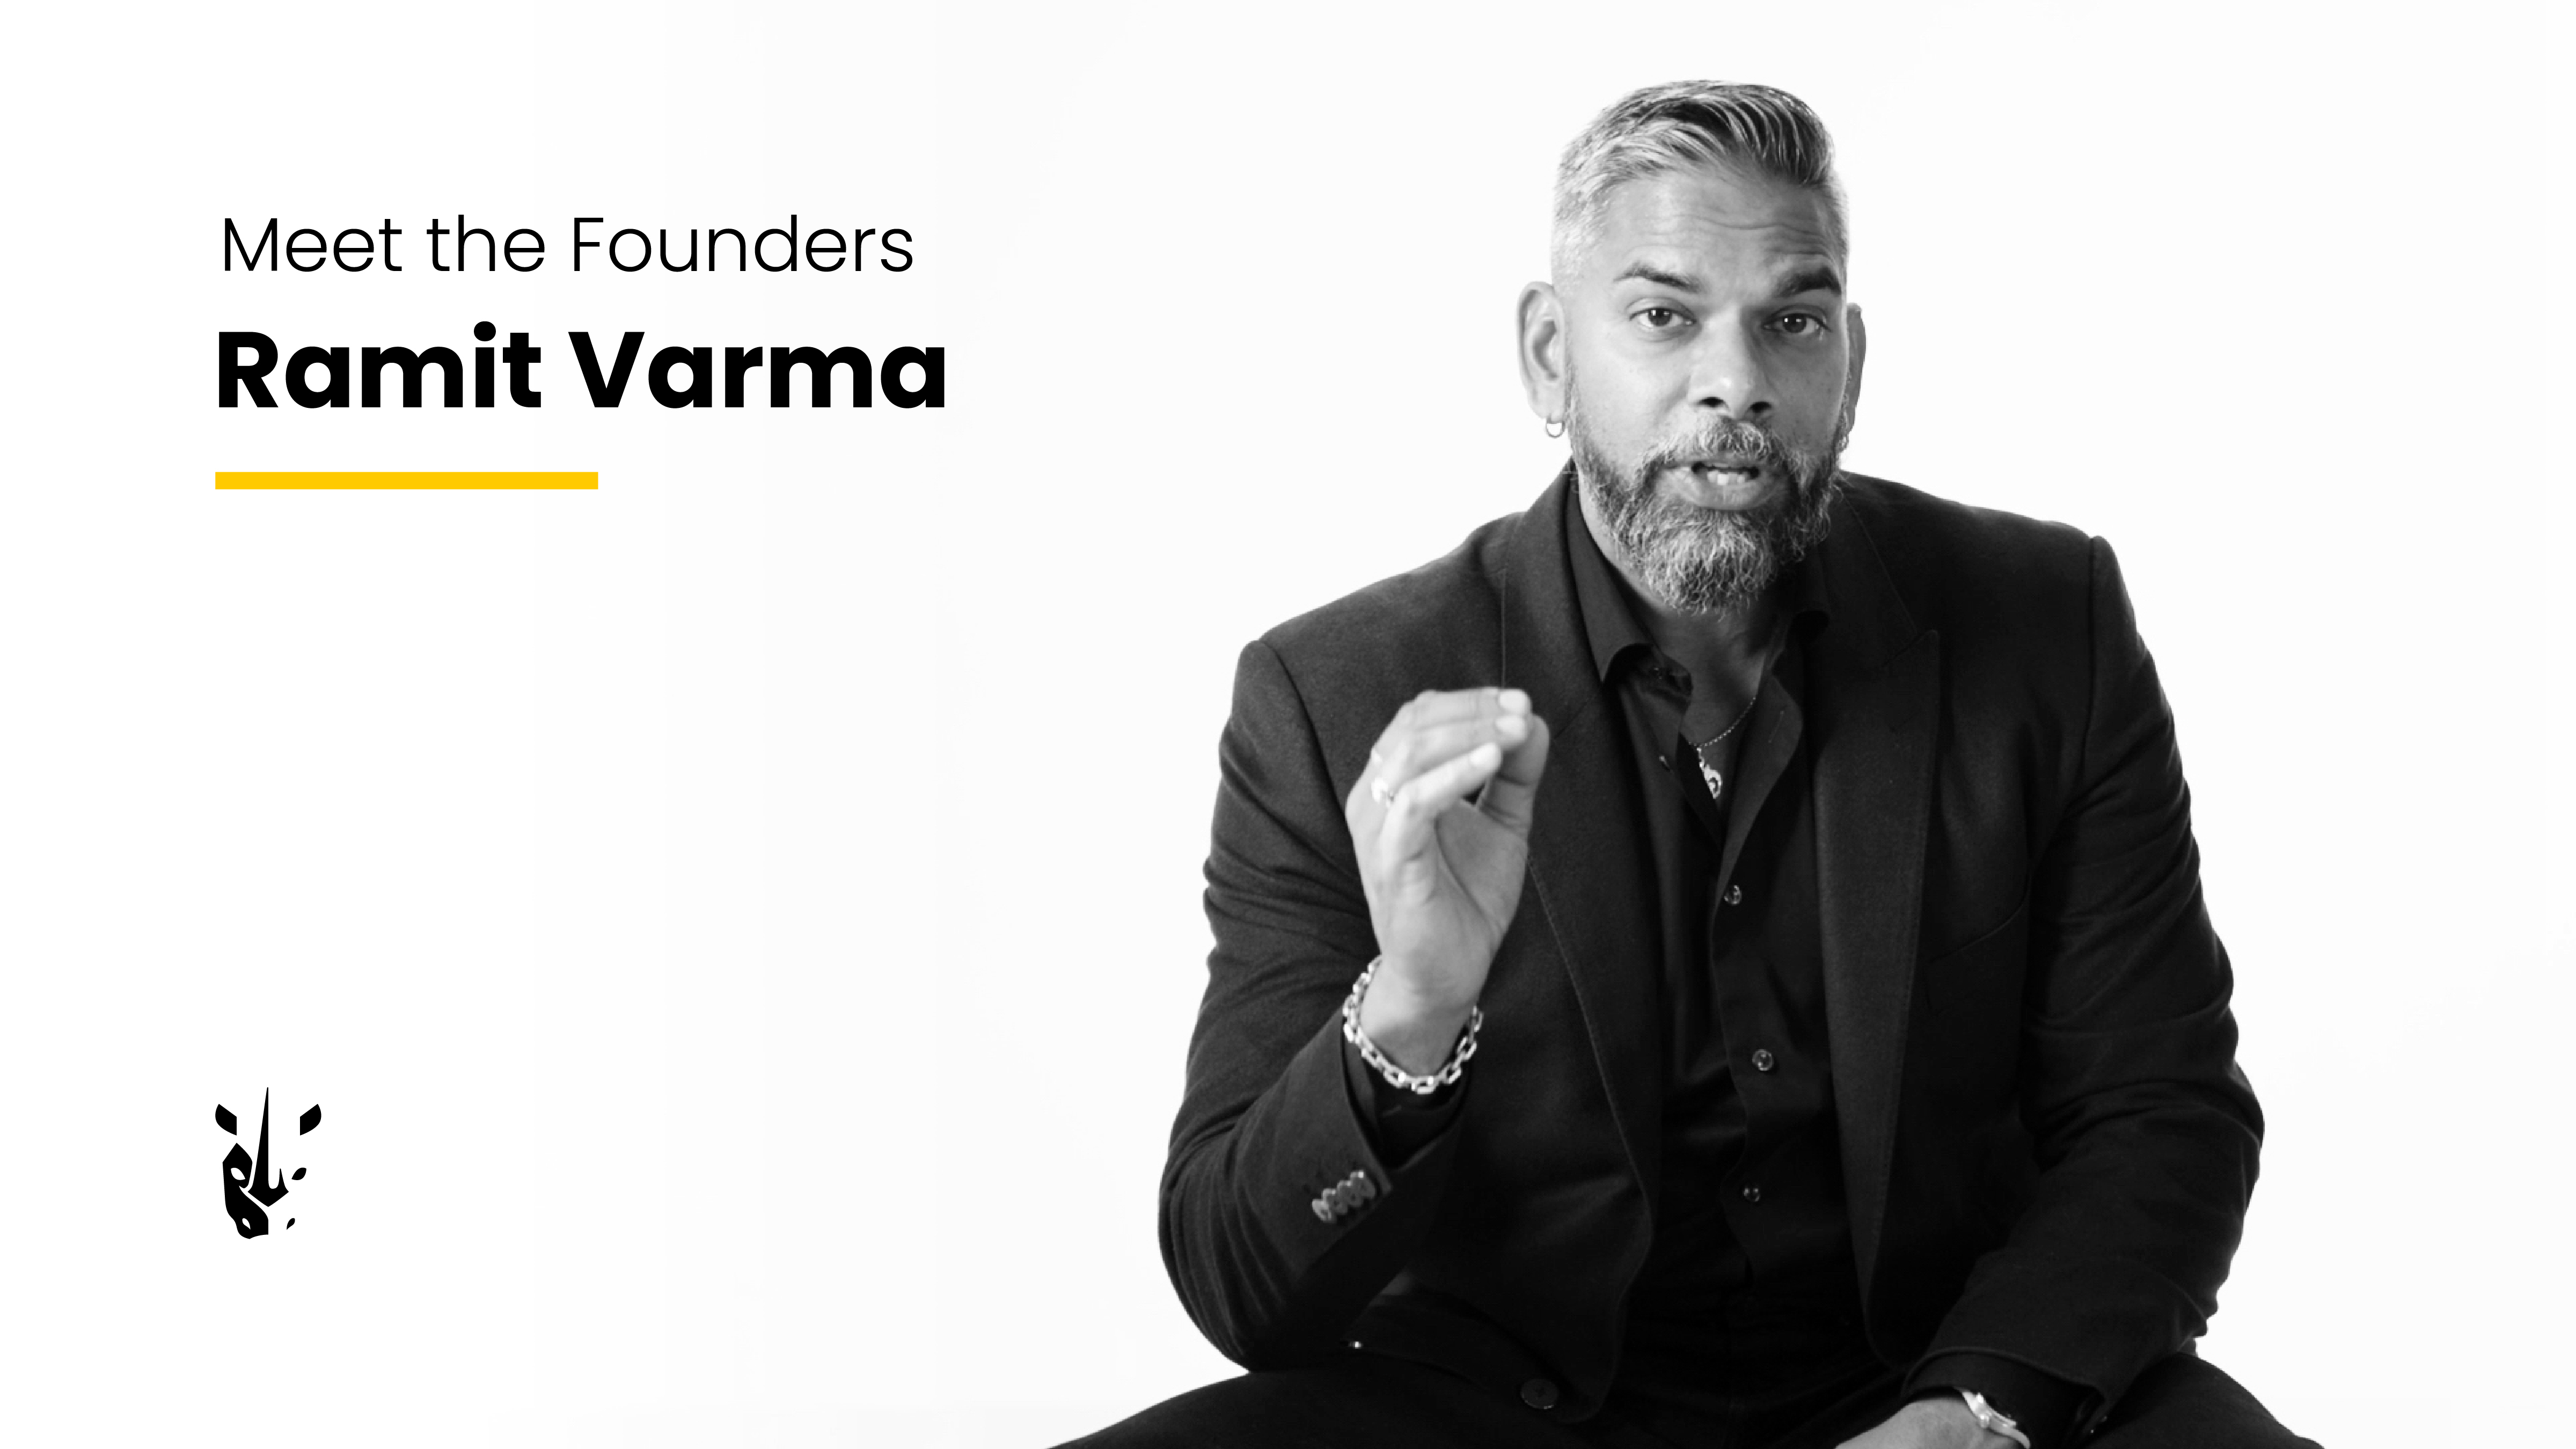 Meet the Founders: Ramit Varma